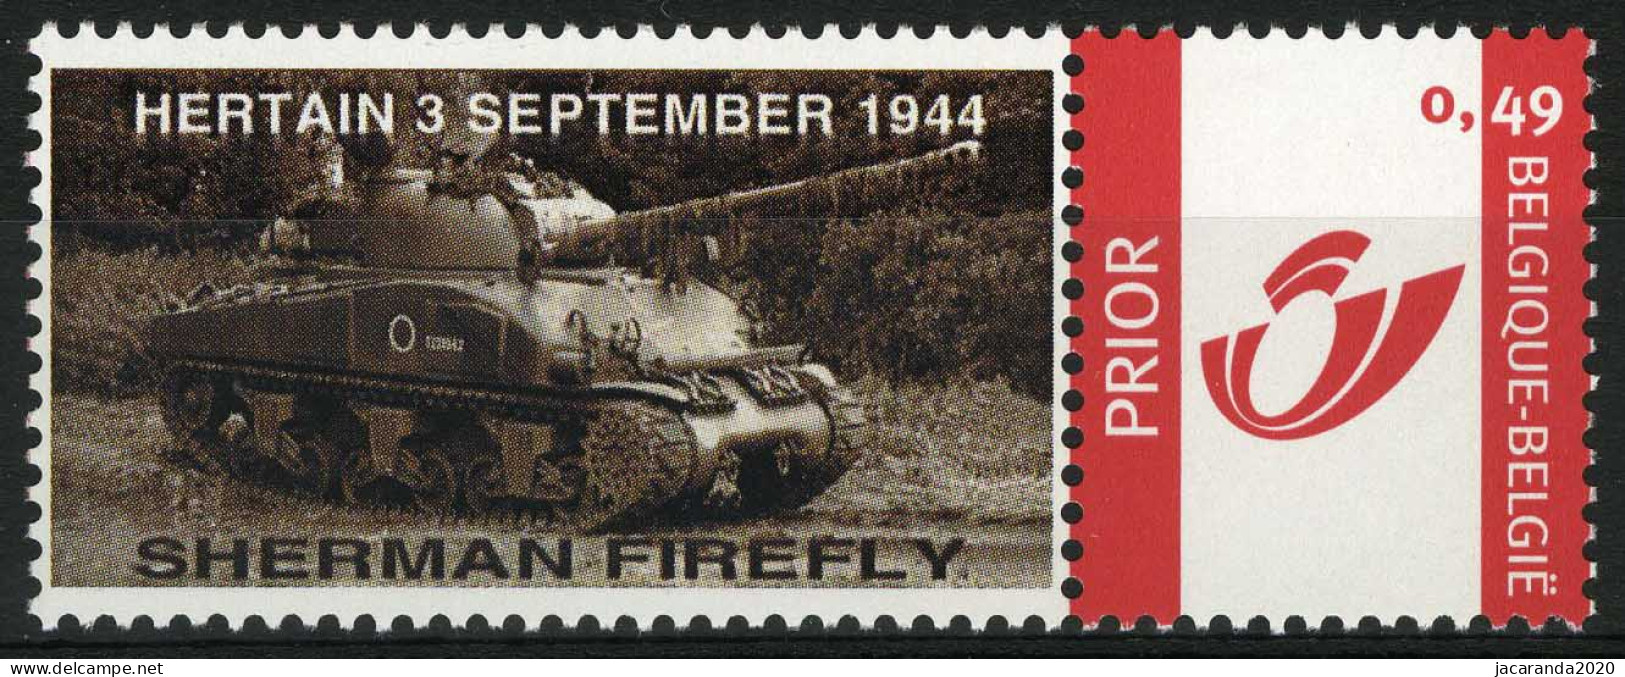 België 3183 - Duostamp - Shireman Firefly - Oorlog - Tank - Hertain 3 September 1944 - Neufs